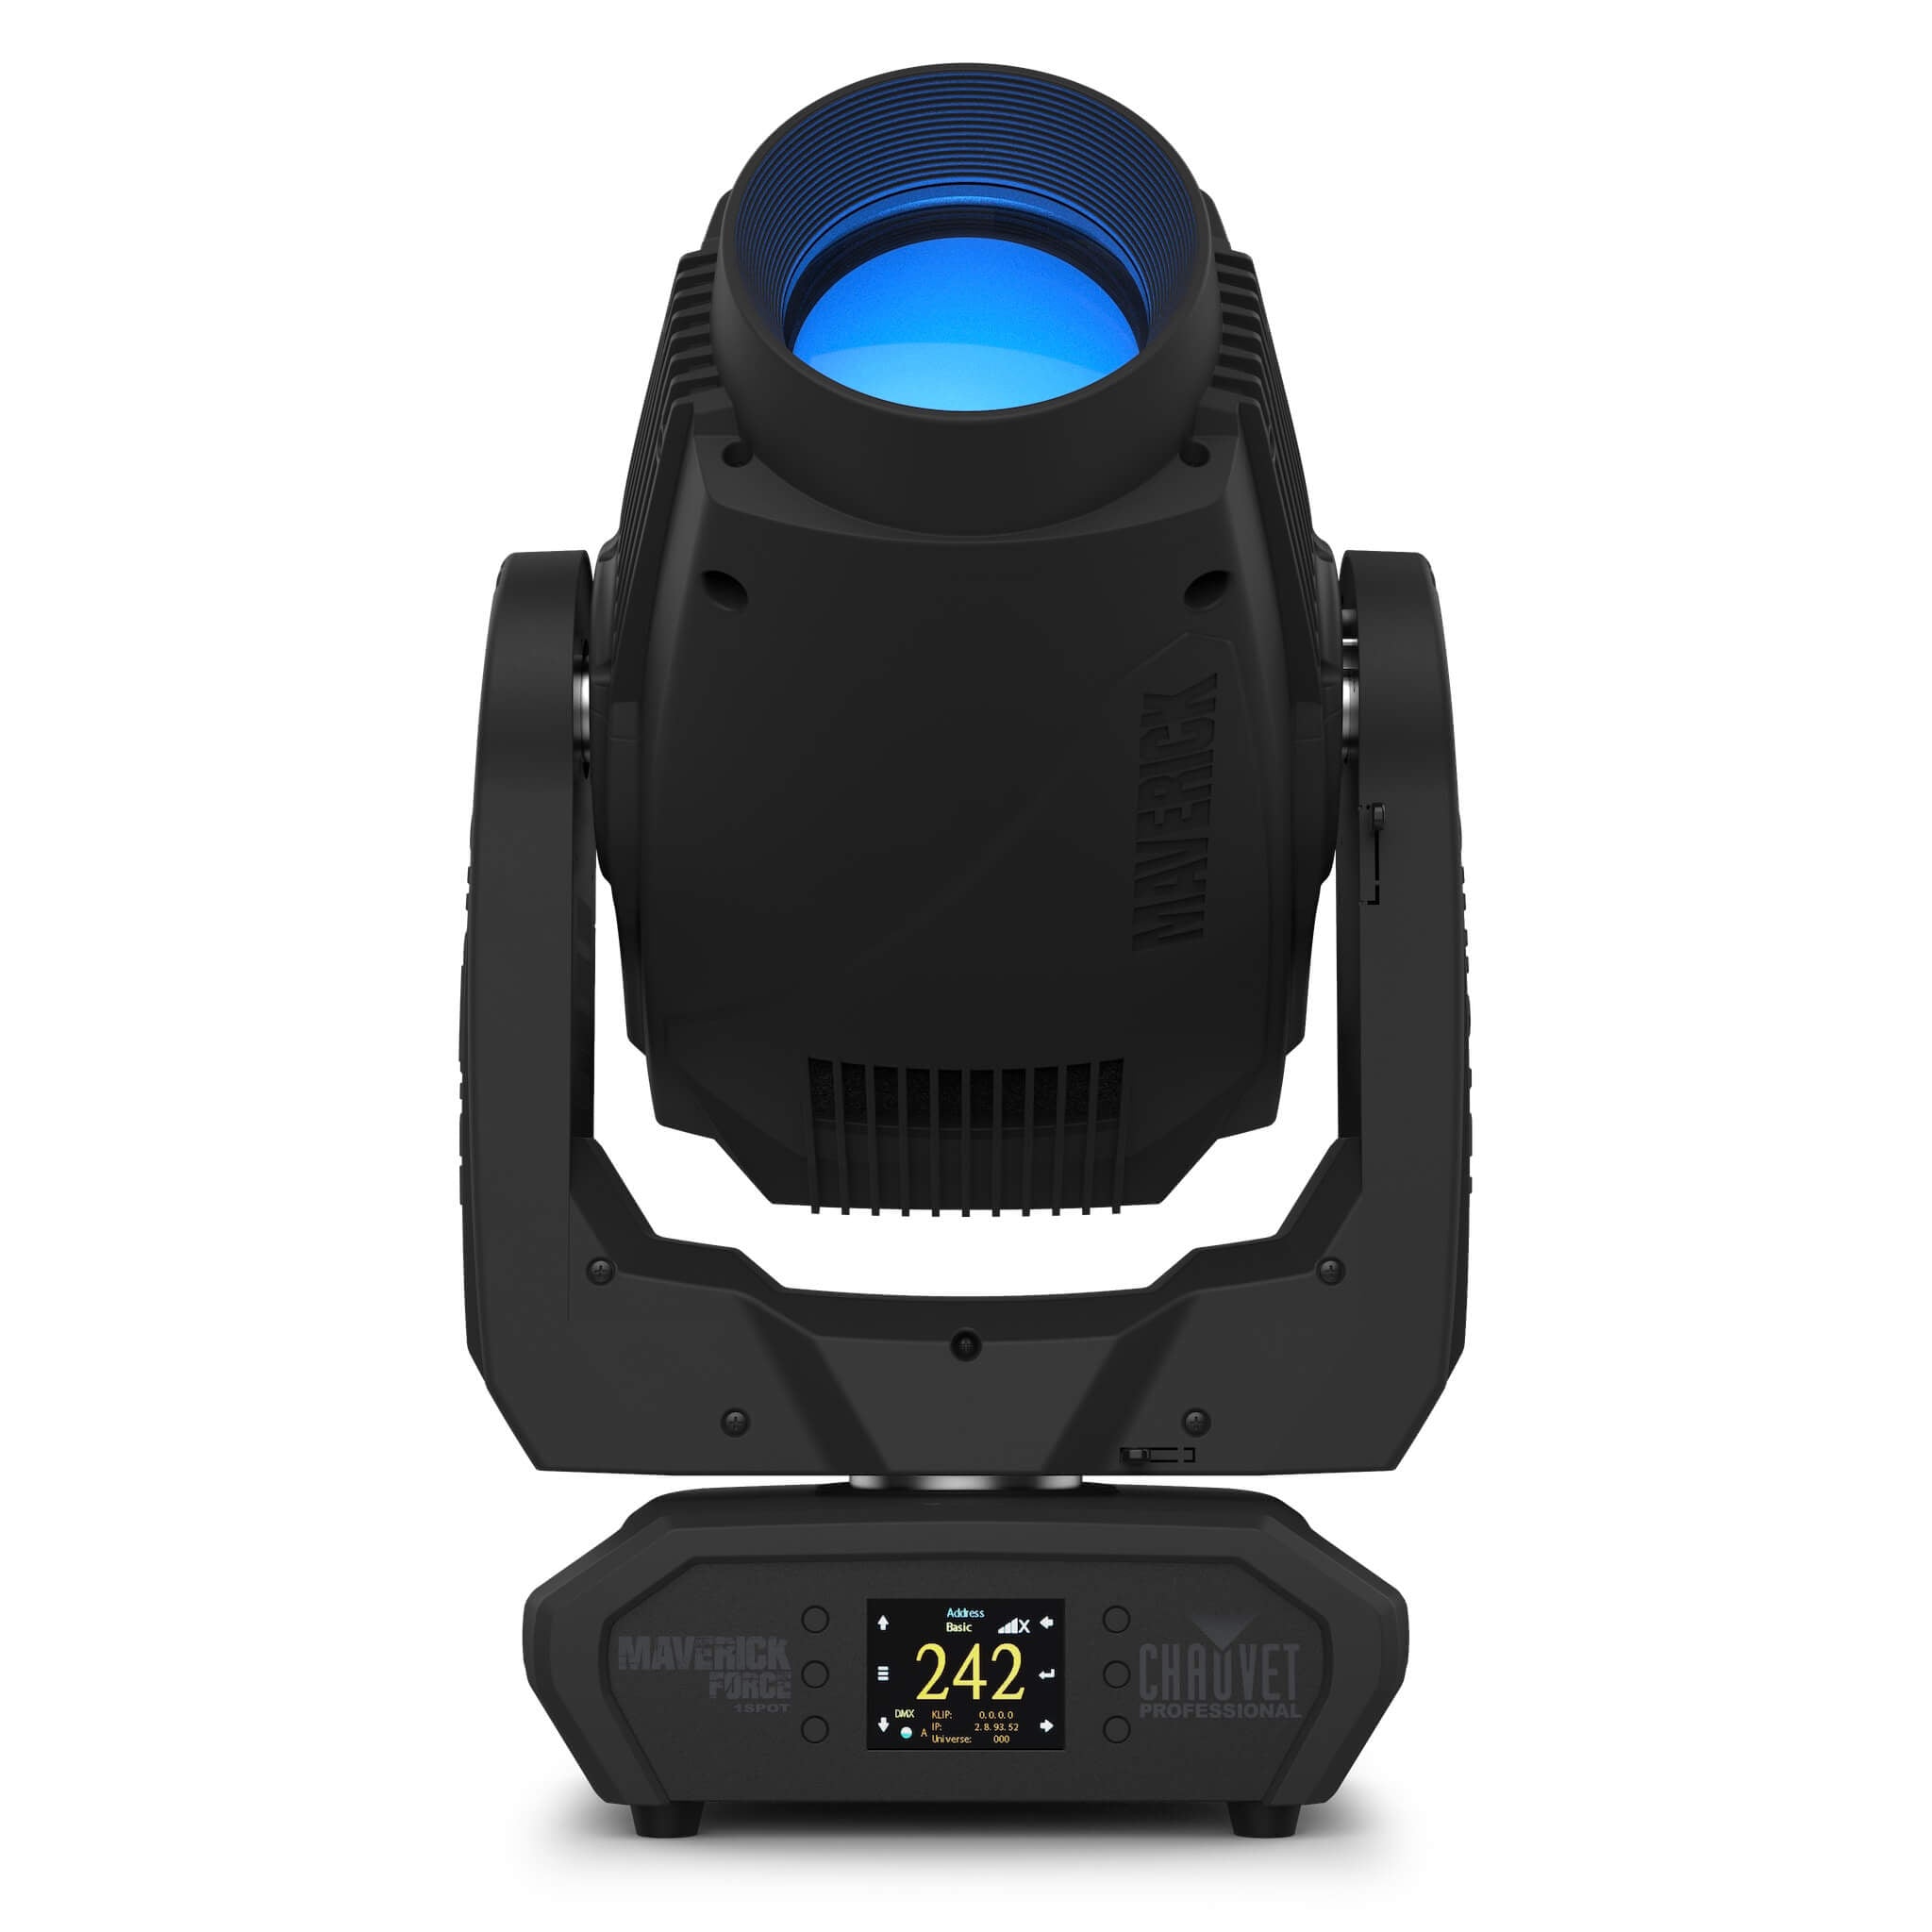 Chauvet Professional Maverick Force 1 Spot - LED Moving Head Light, front